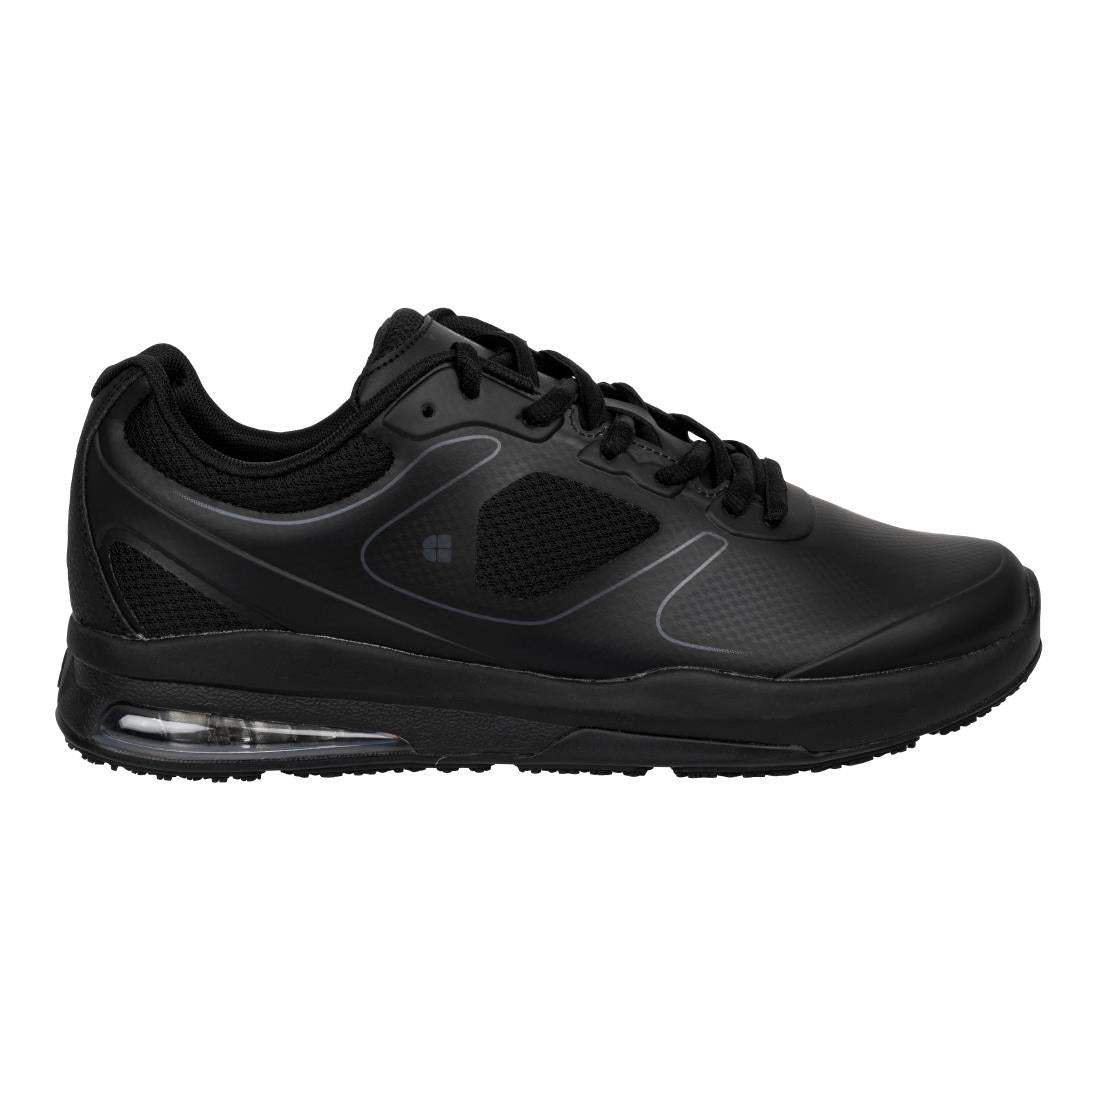 BB586-39 Shoes for Crews Men's Evolution Trainers Black Size 39